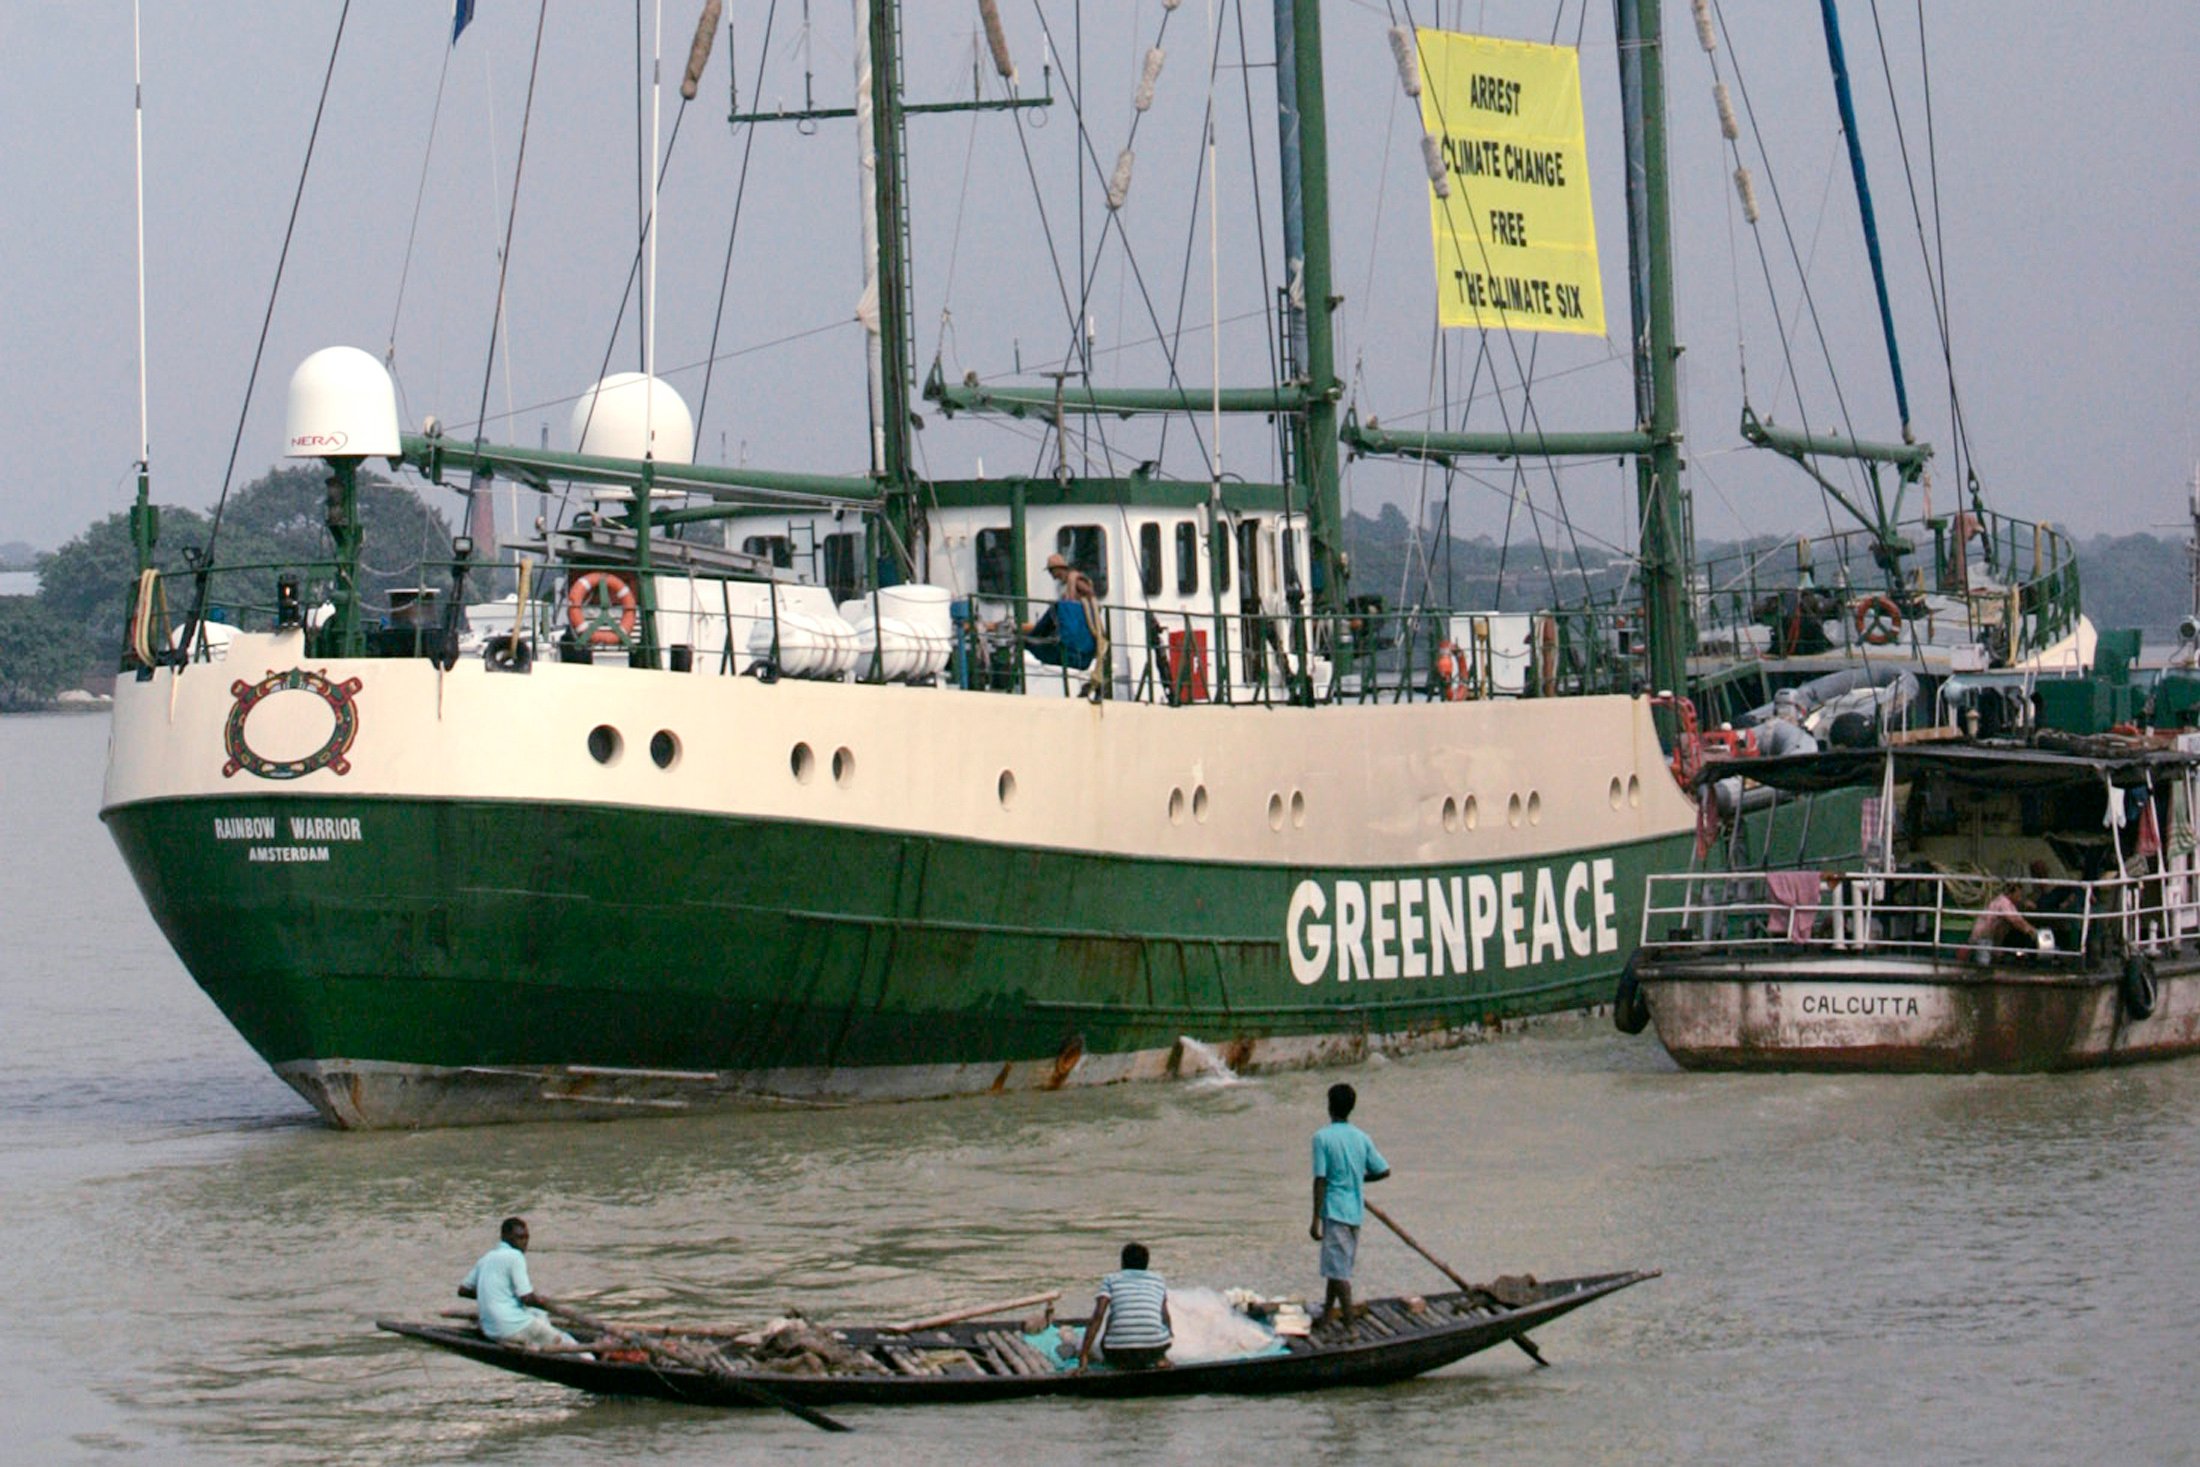 Fishermen watch the Green peace ship "Rainbow Warrior" sail on the river Hooghly in Kolkata